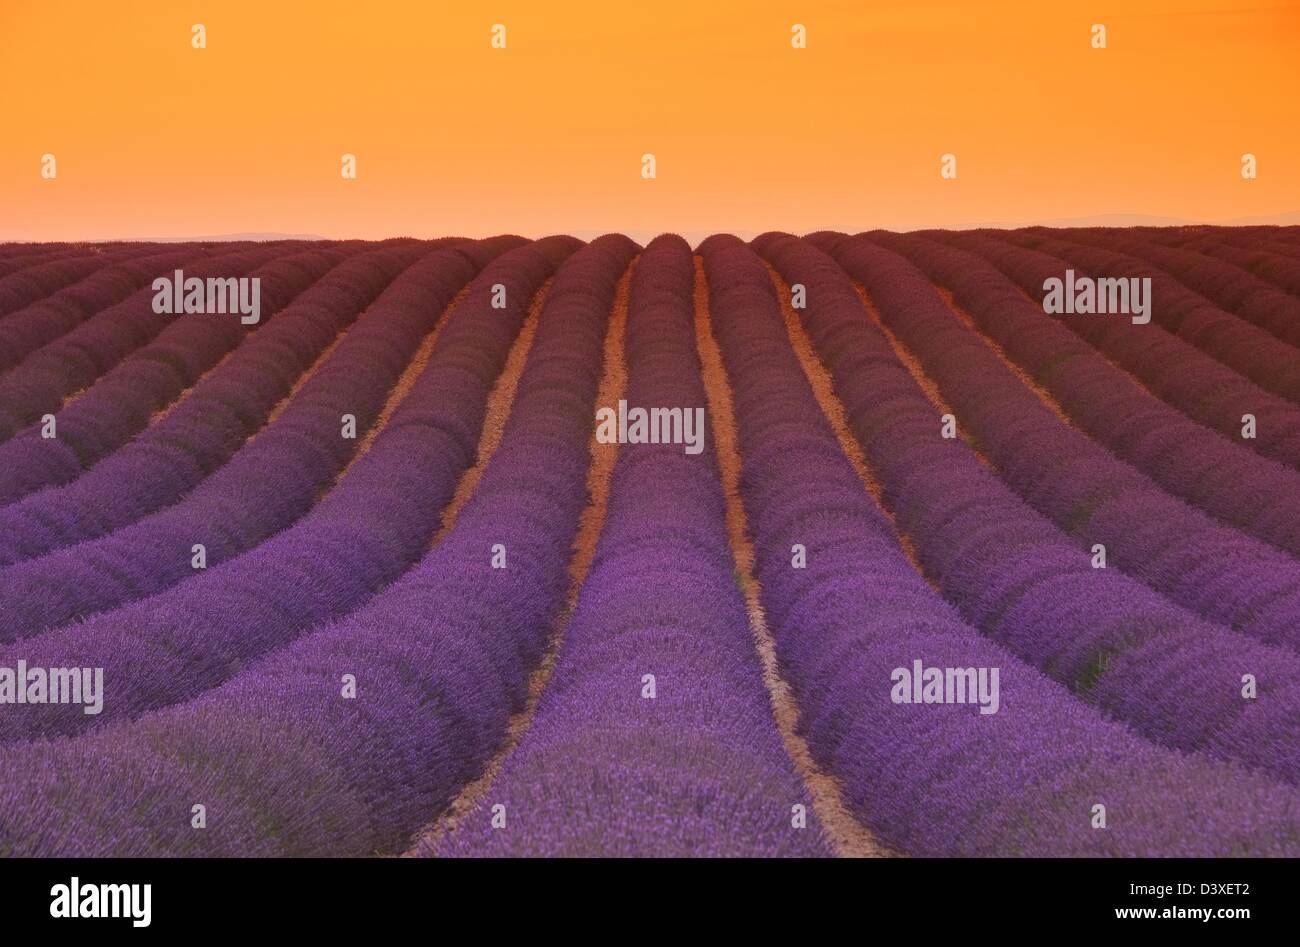 Lavendelfeld Sonnenuntergang - lavender field sunset 04 Stock Photo